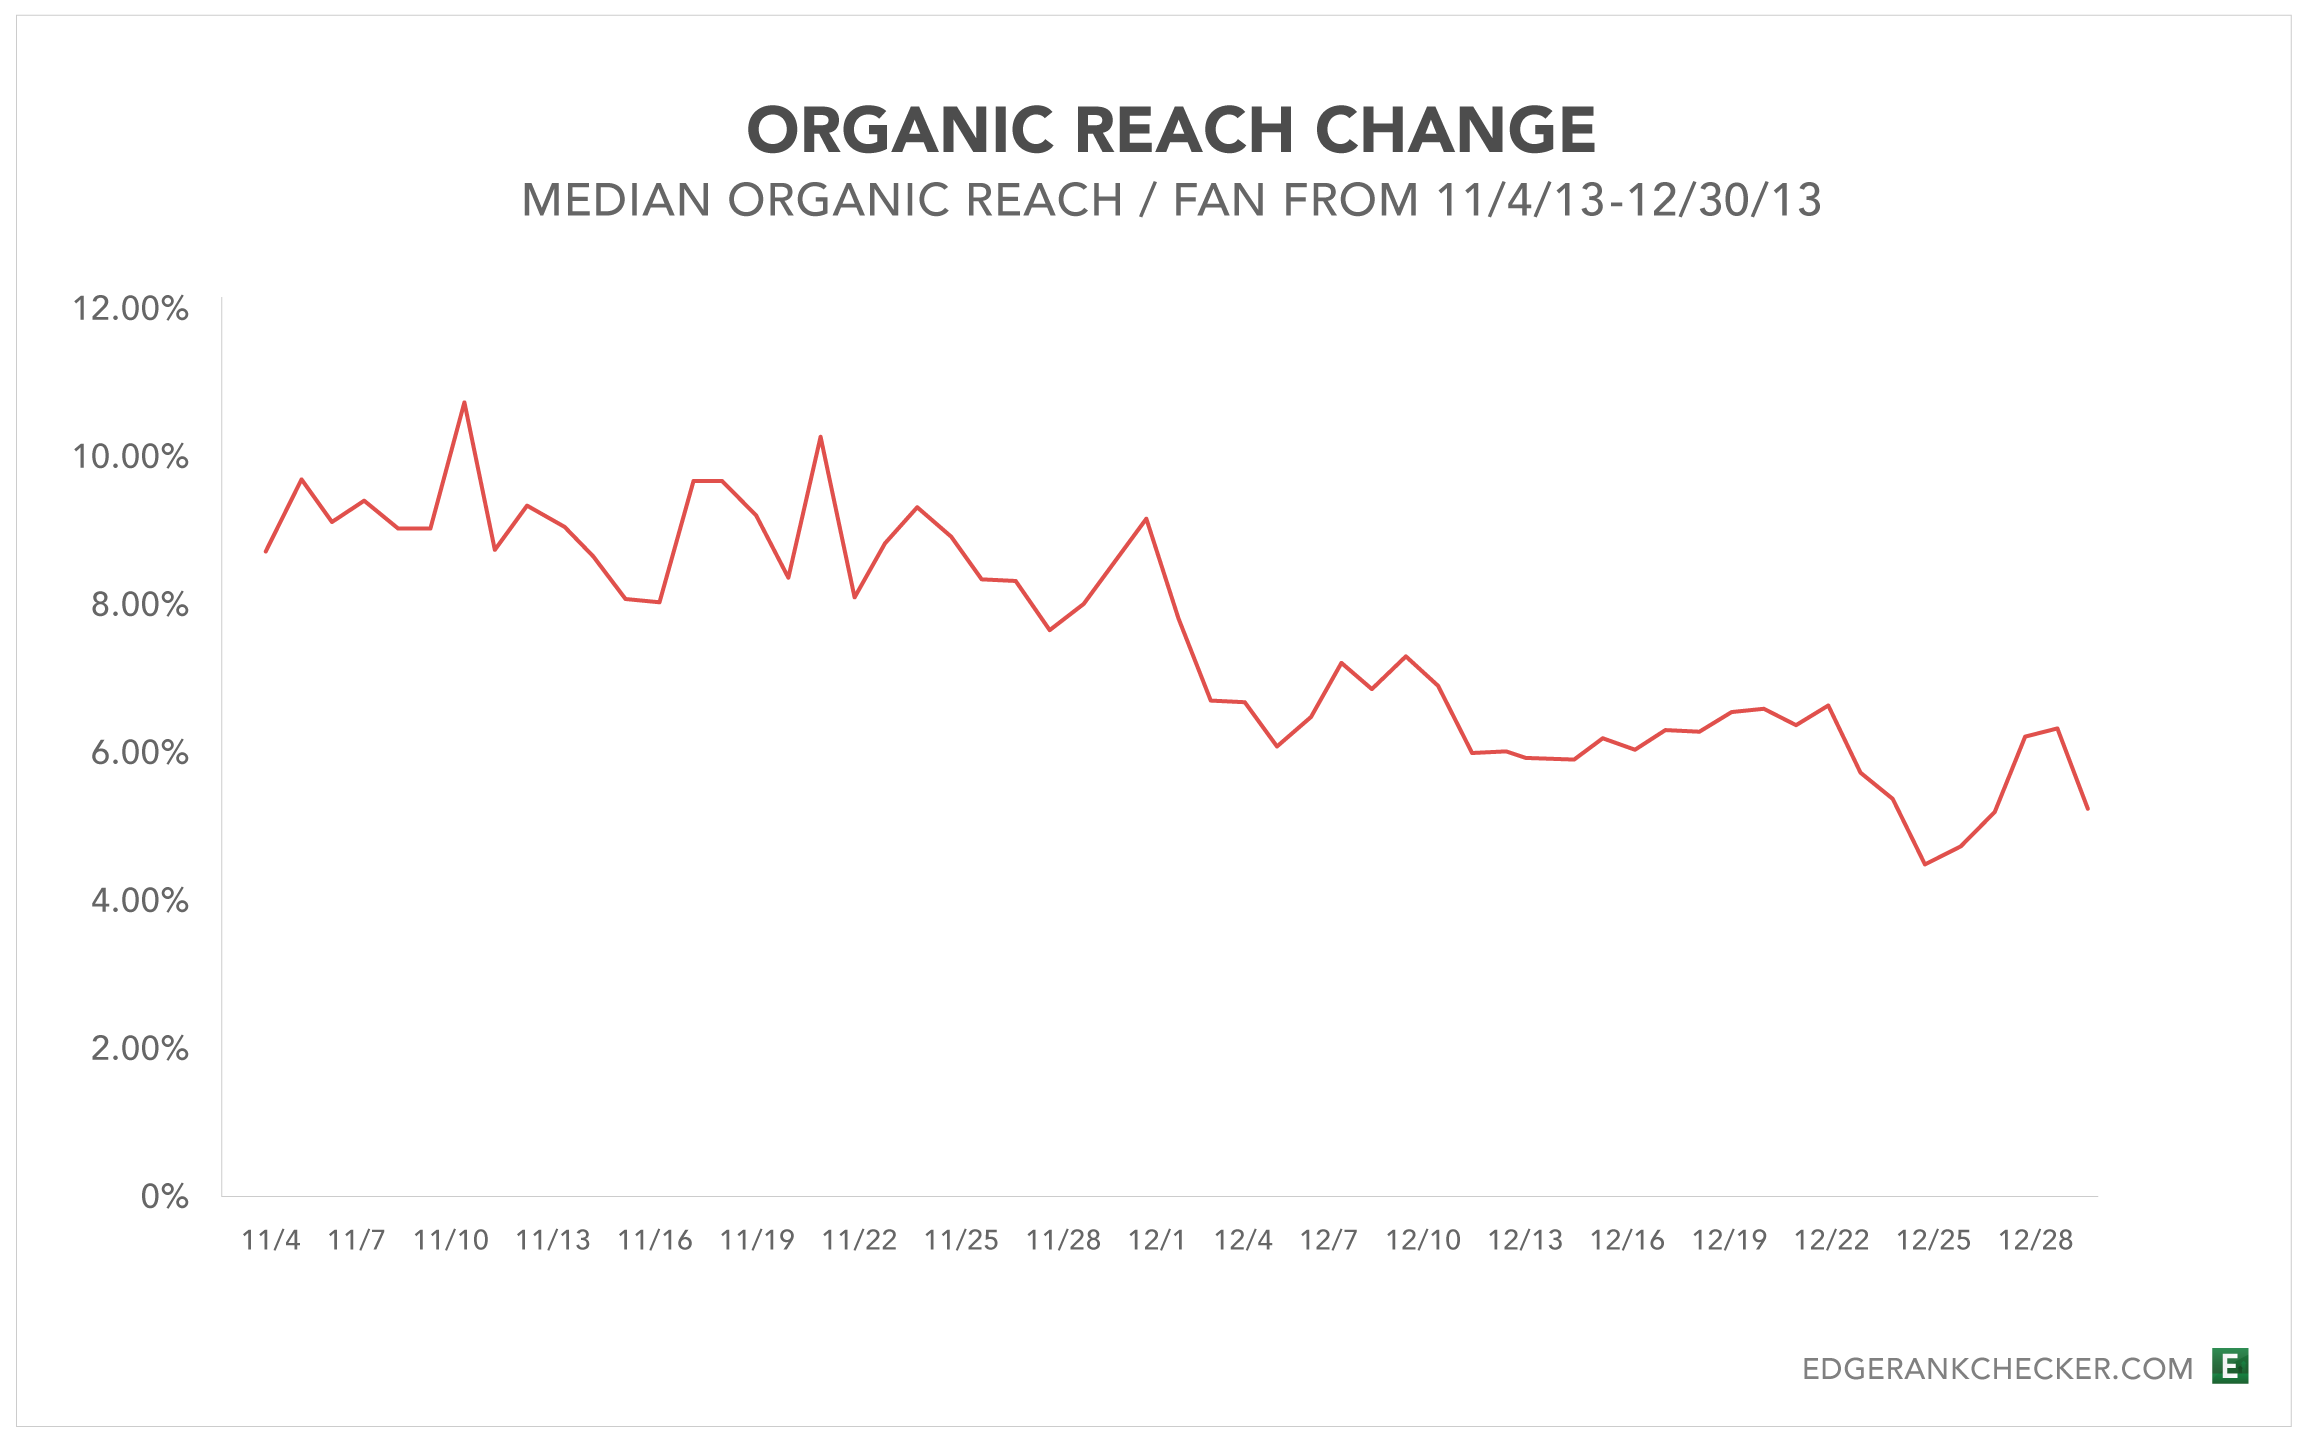 Organic reach change